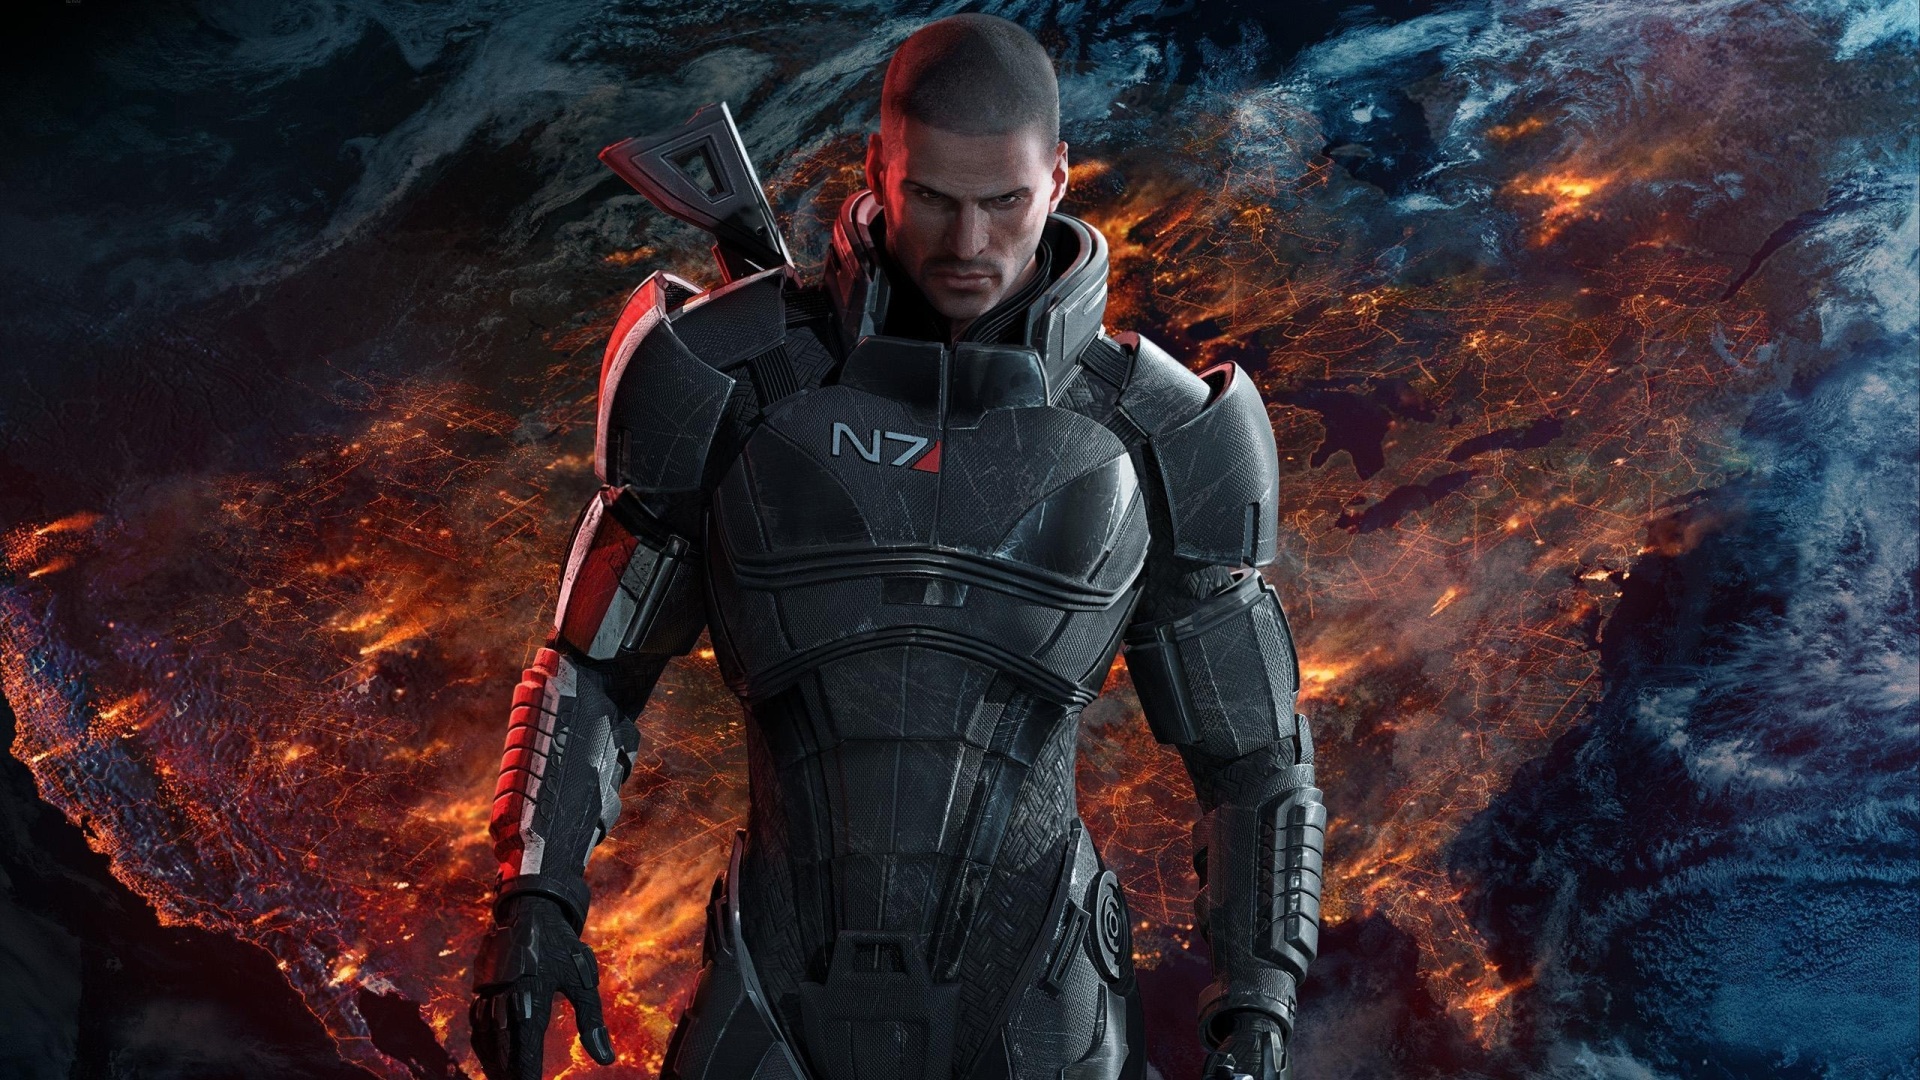 Wallpaper Fond D Ecran Pour Mass Effect Pc Ps3 Xbox Wiiu